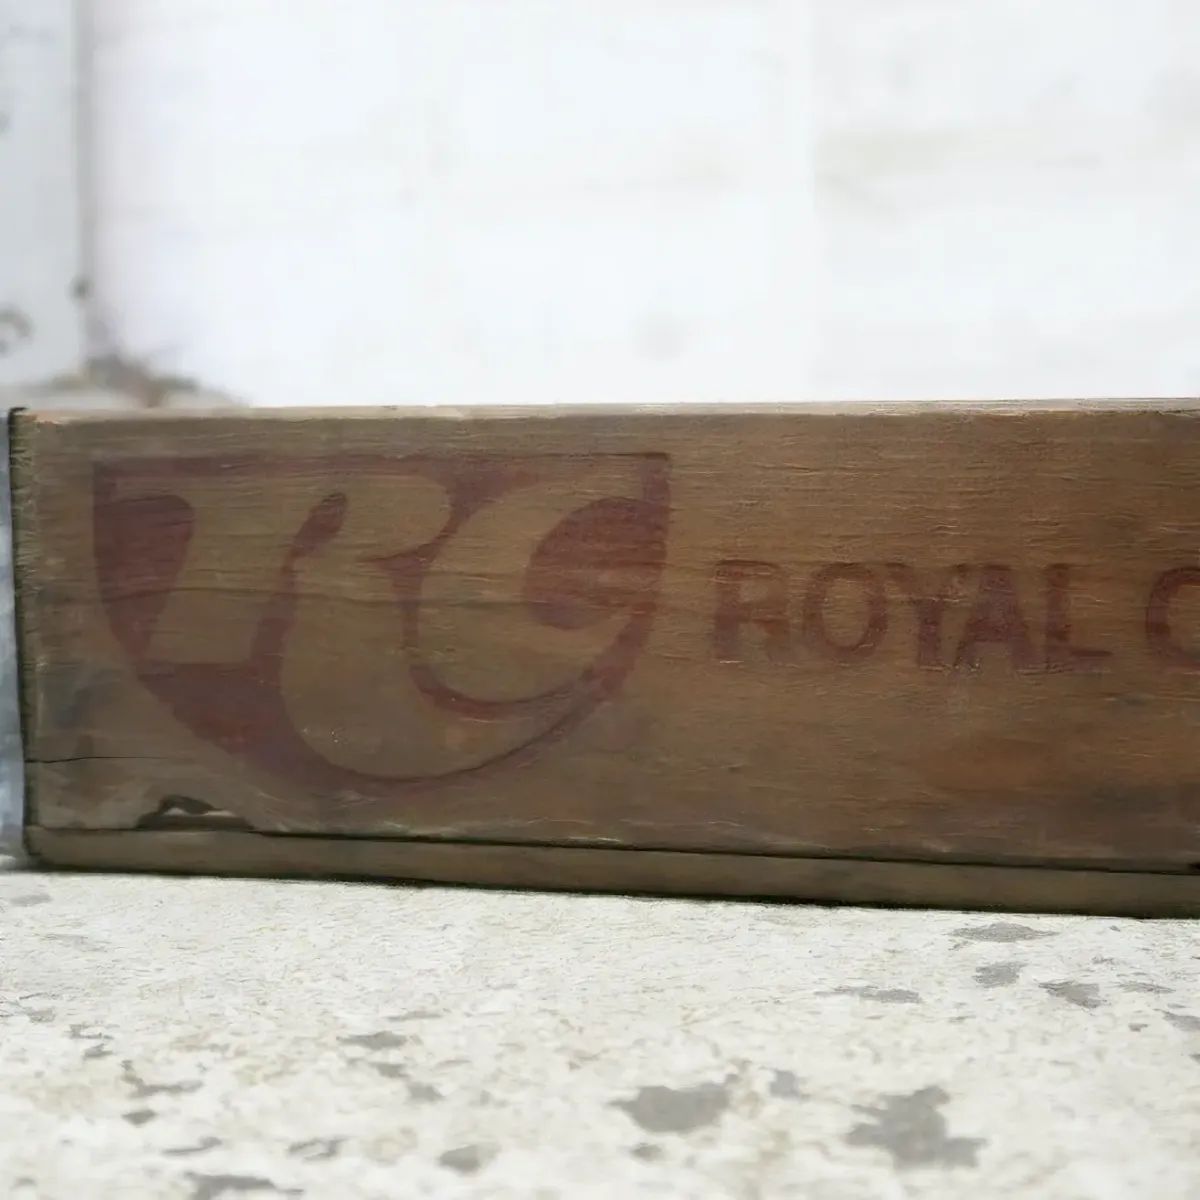 ROYAL CROWN COLA ビンテージ ウッドボックス